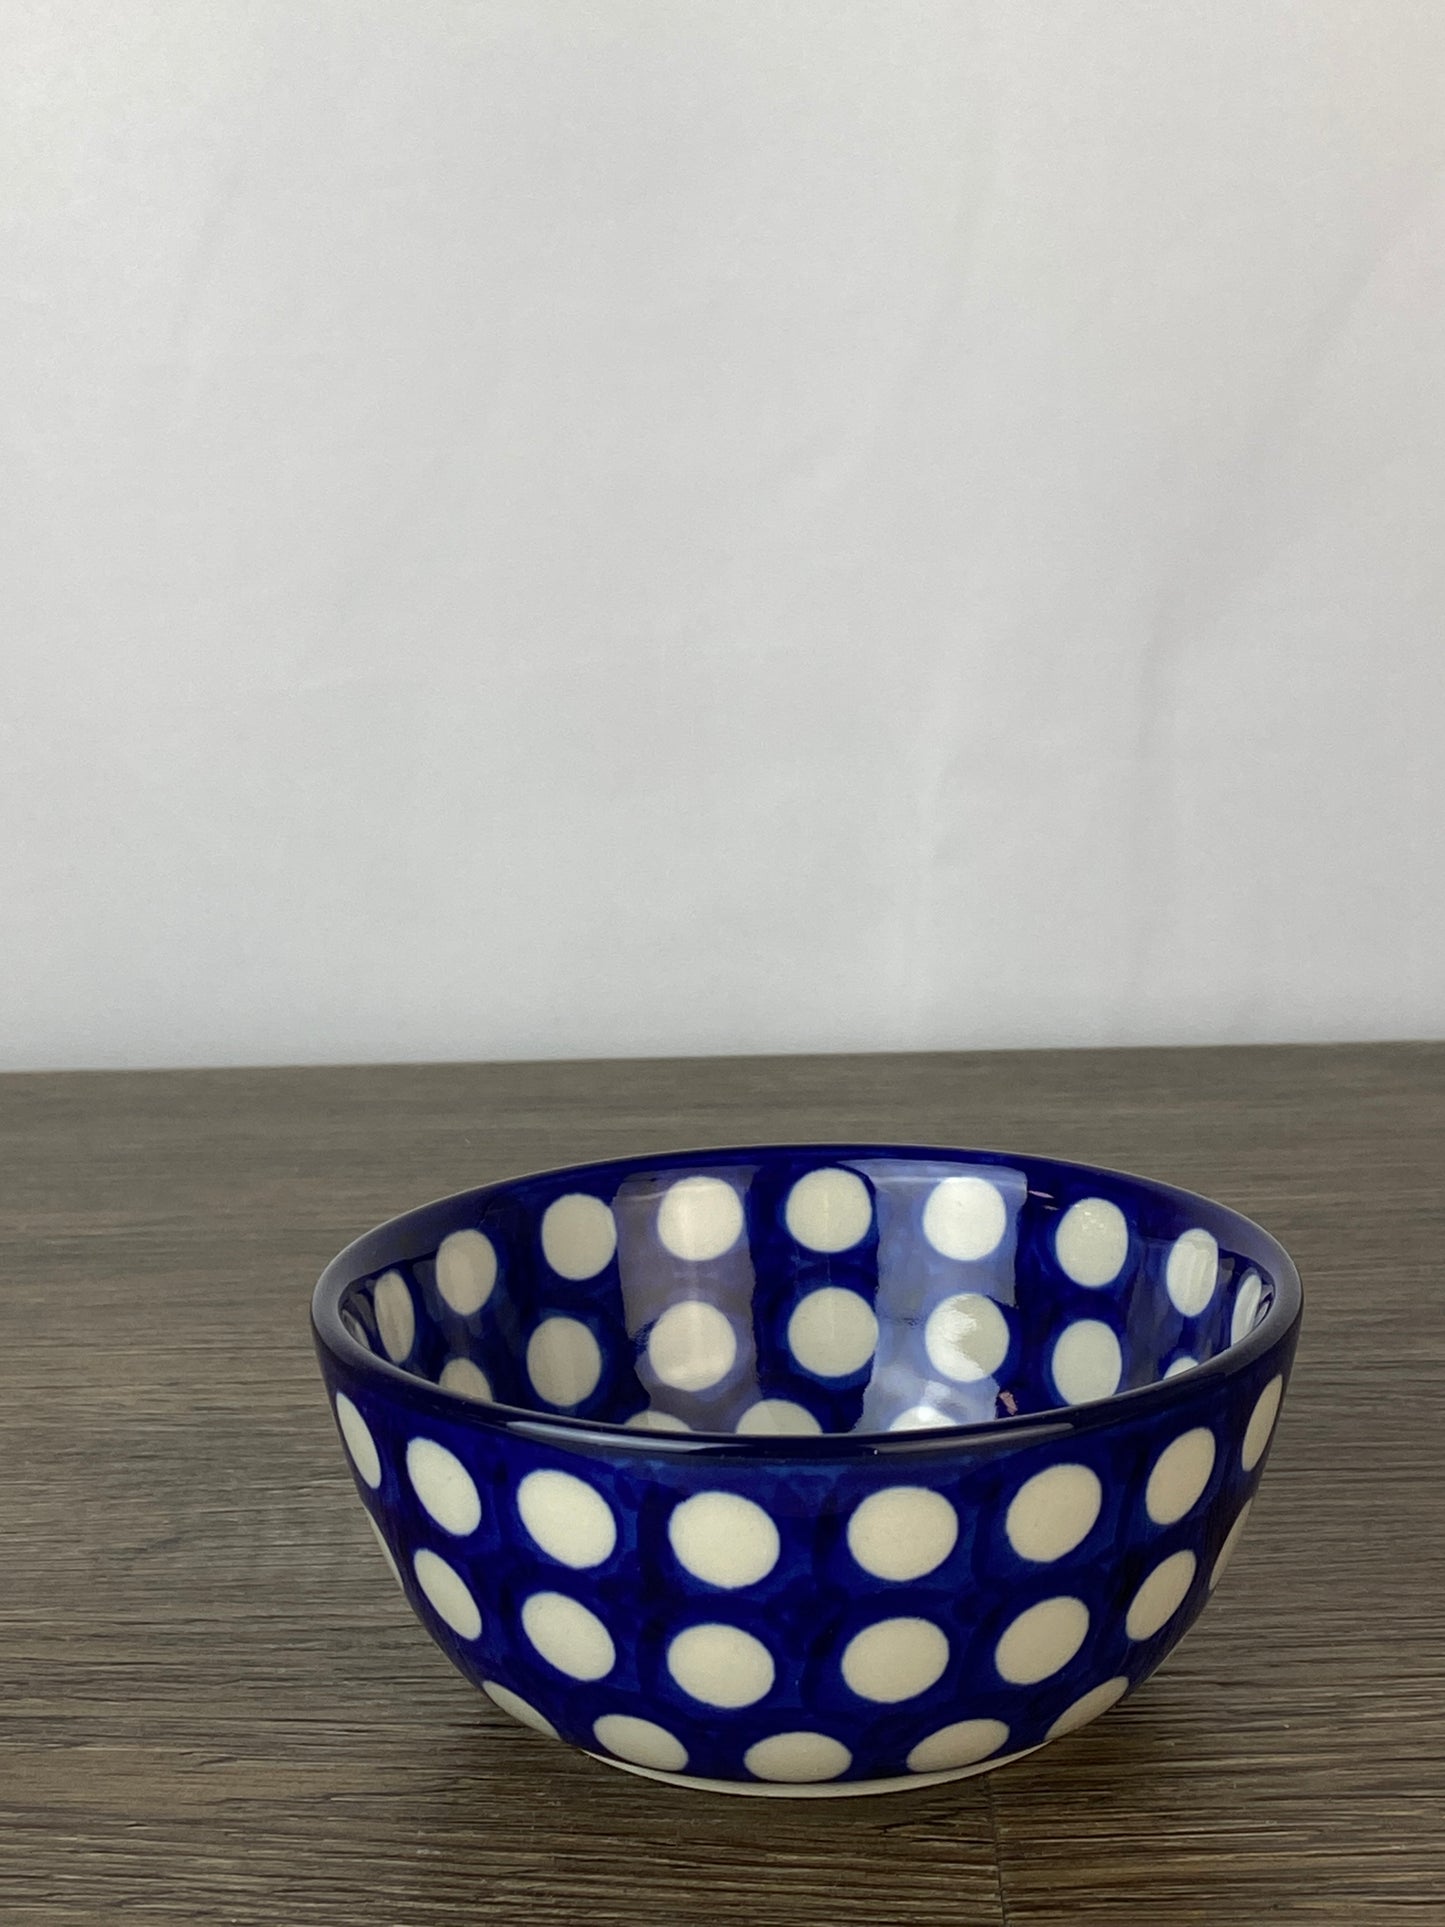 SALE Small Cereal / Dessert Bowl - Shape 17 - Pattern 2728